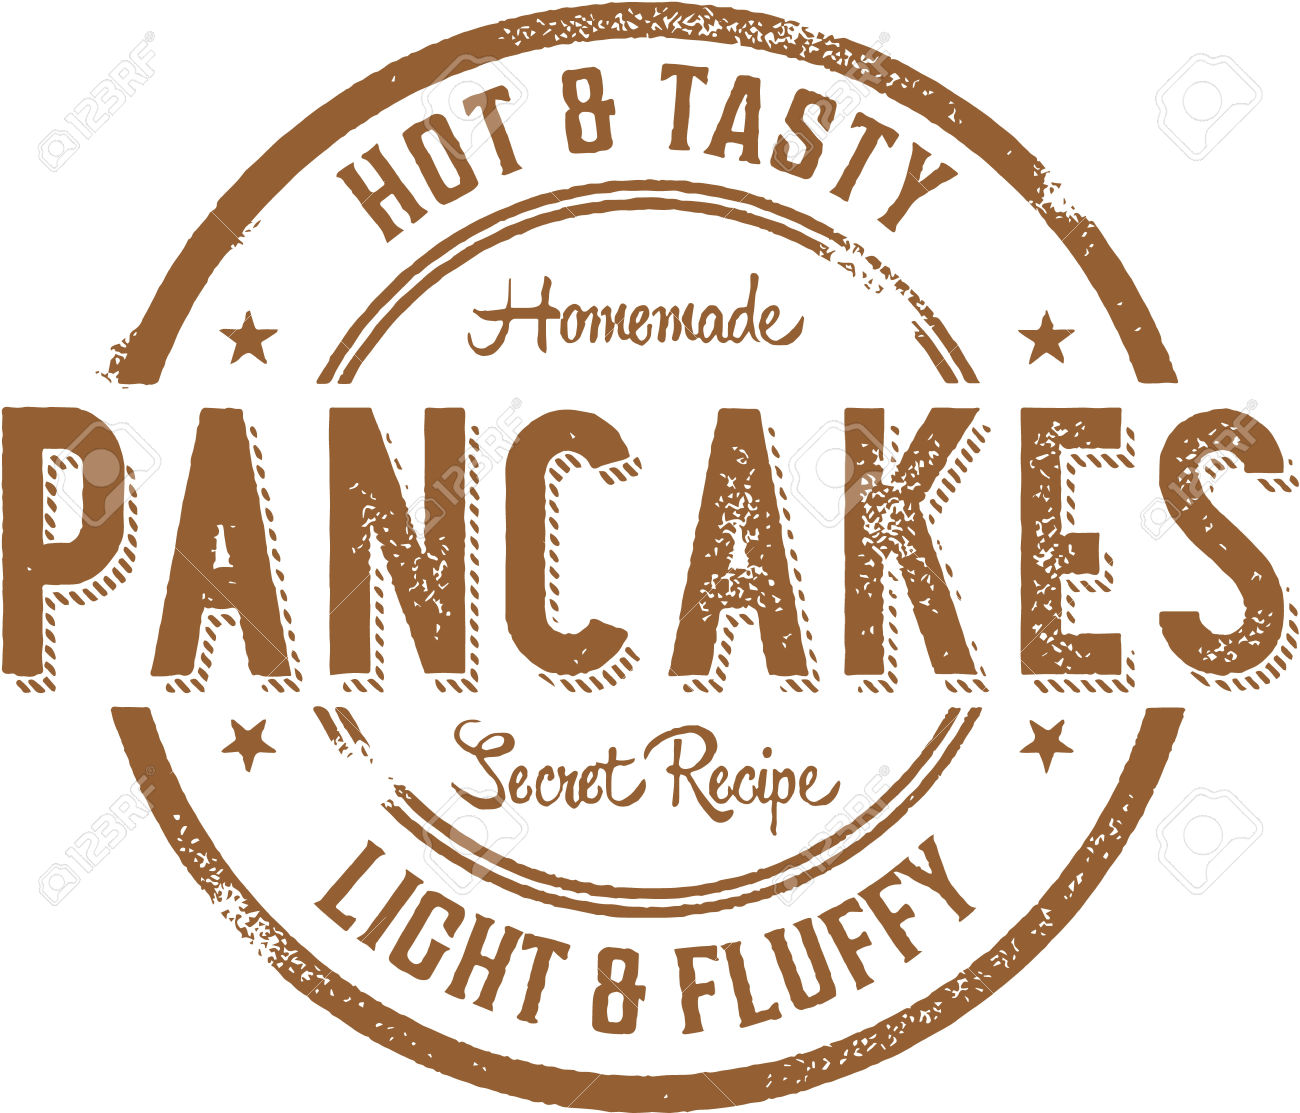 Pancake breakfast